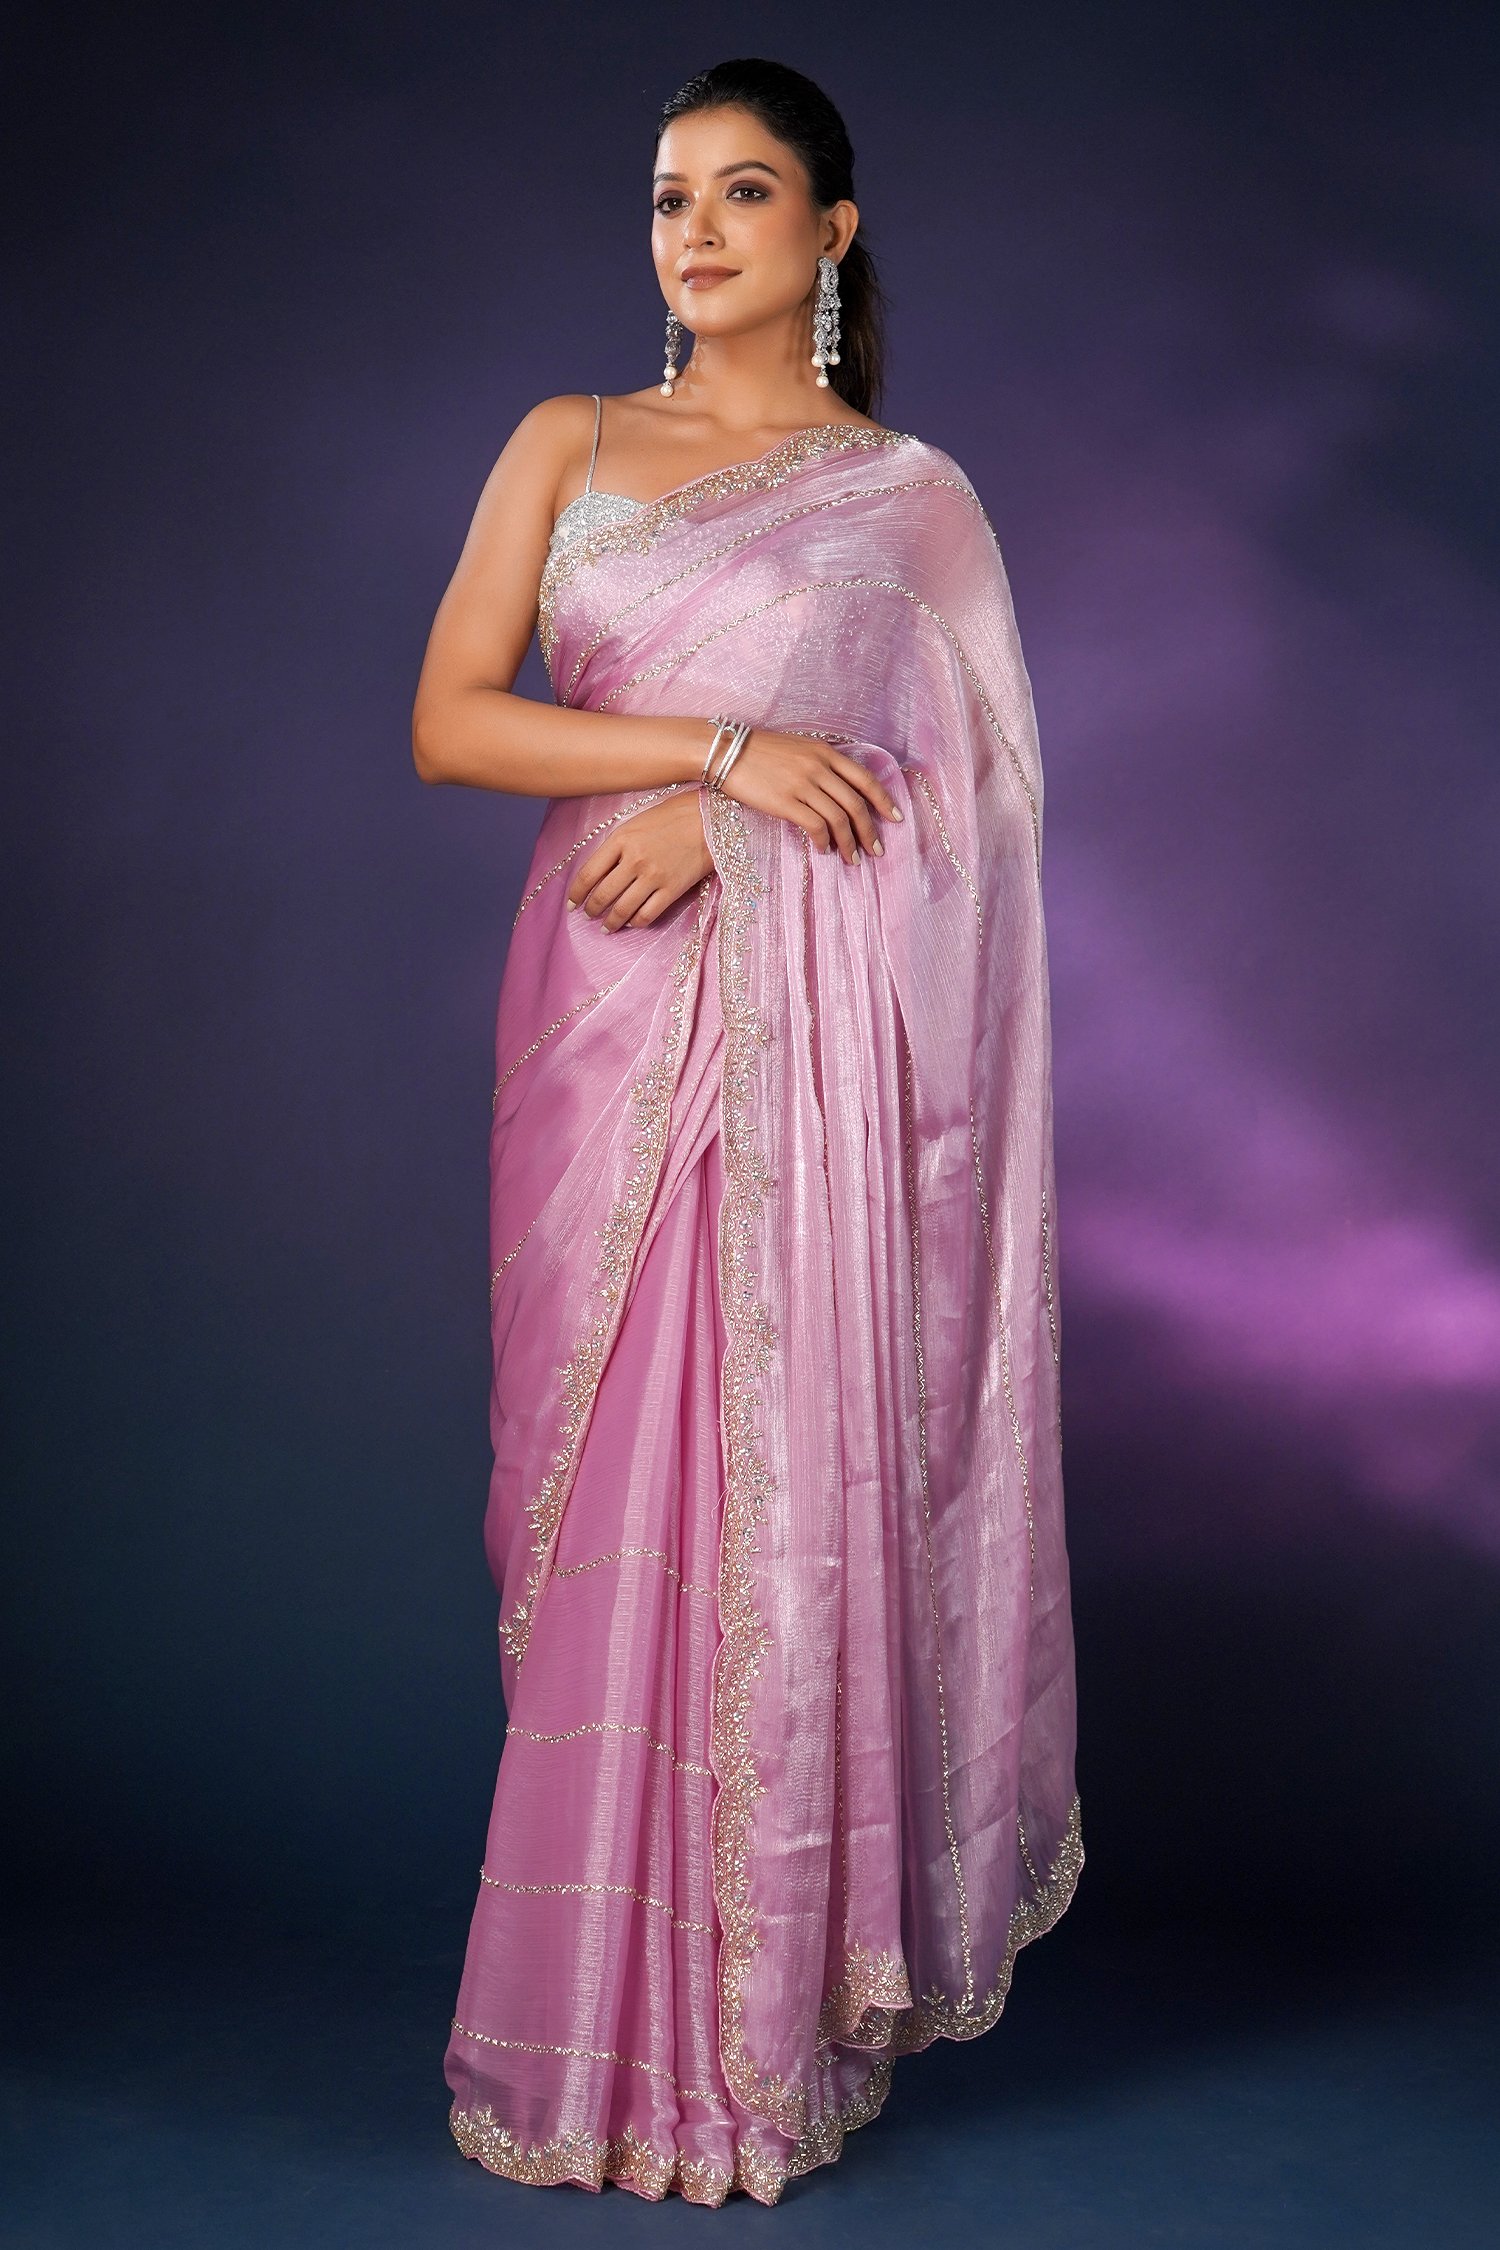 lehenga saree draping style with one saree | how to wear lehenga saree -  YouTube